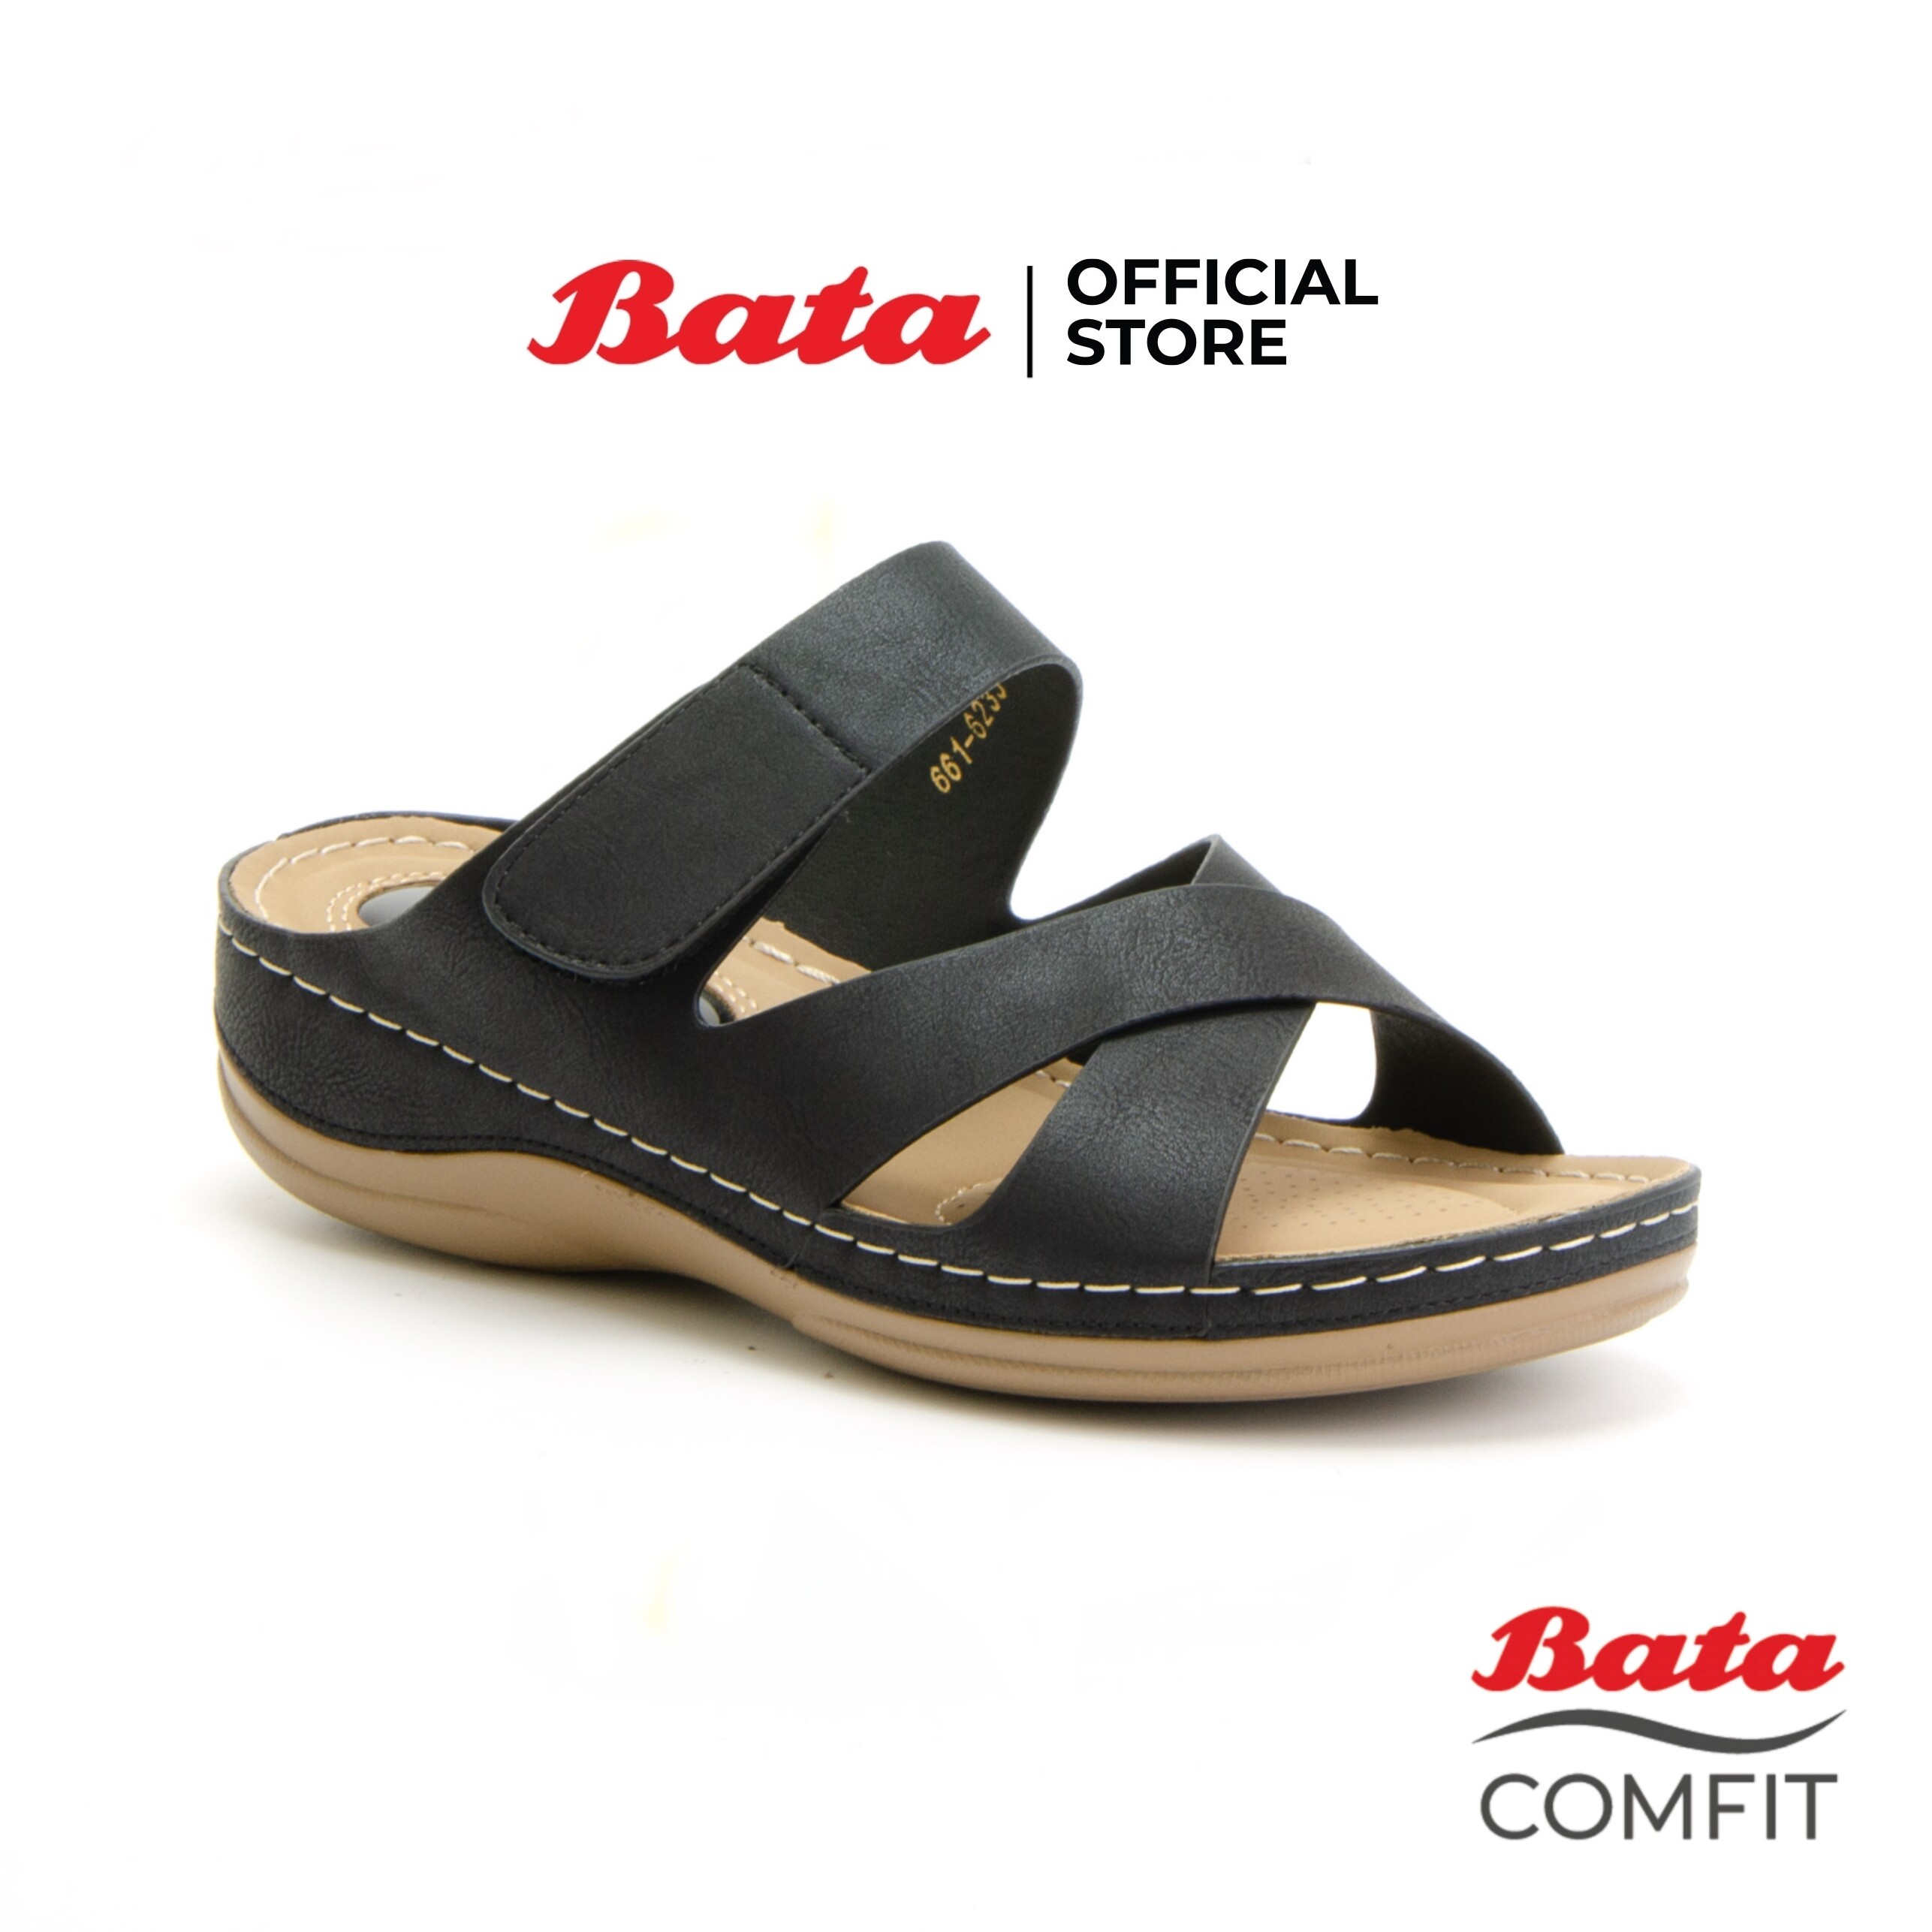 Bata COMFIT SLIP ON รองเท้าลำลองแฟชั่น แบบสวม เปิดส้น สีดำ รหัส 6616233 Ladiescomfort Fashion